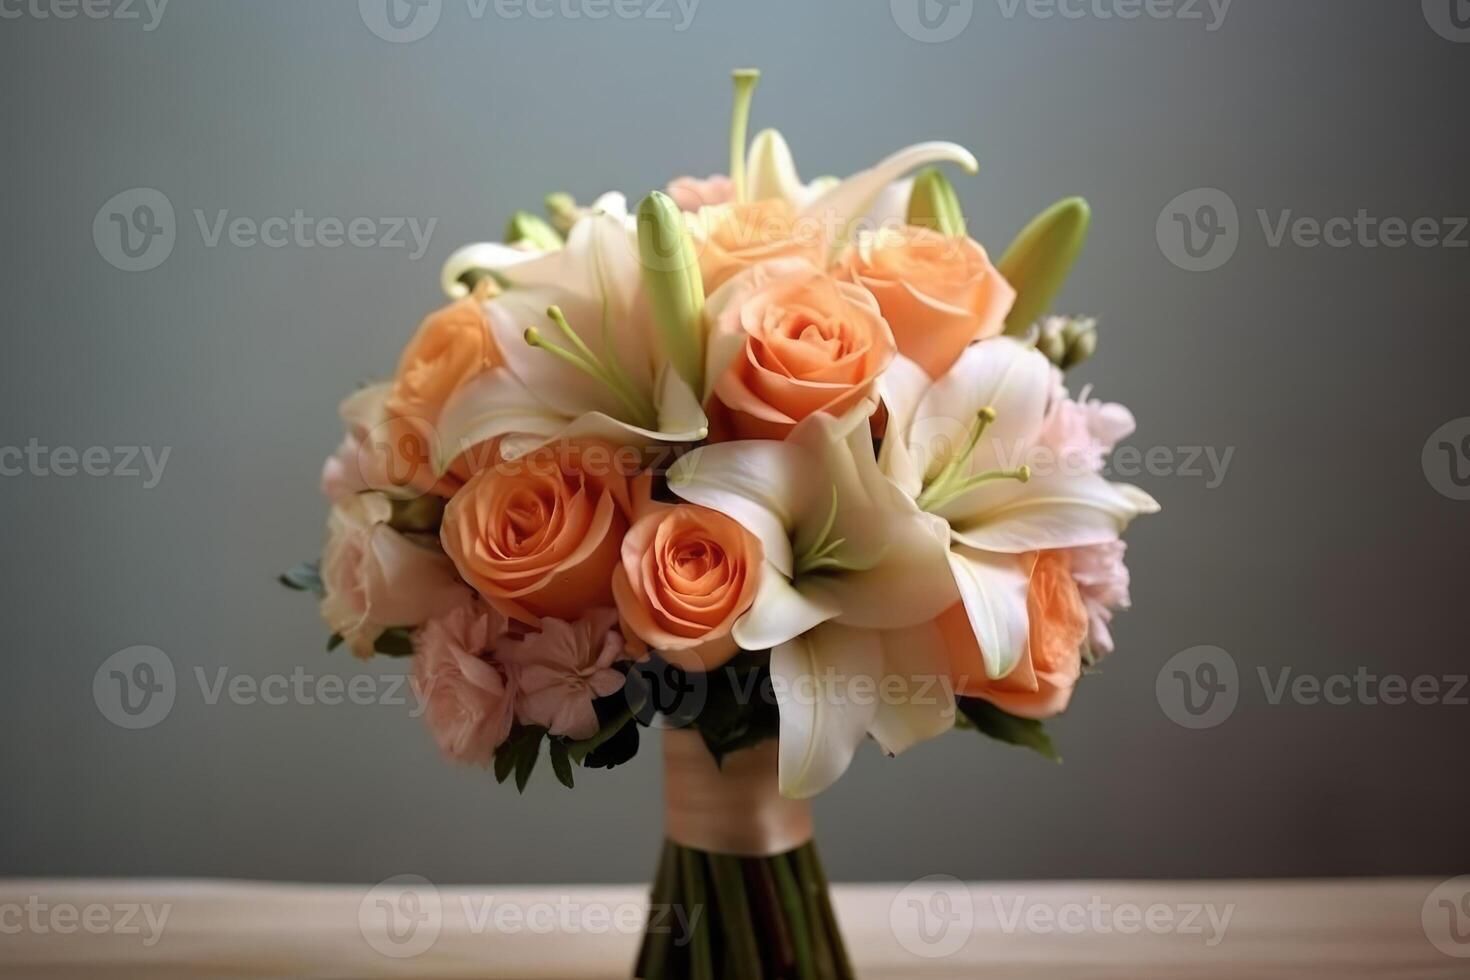 stock photo of wedding flower bouquet